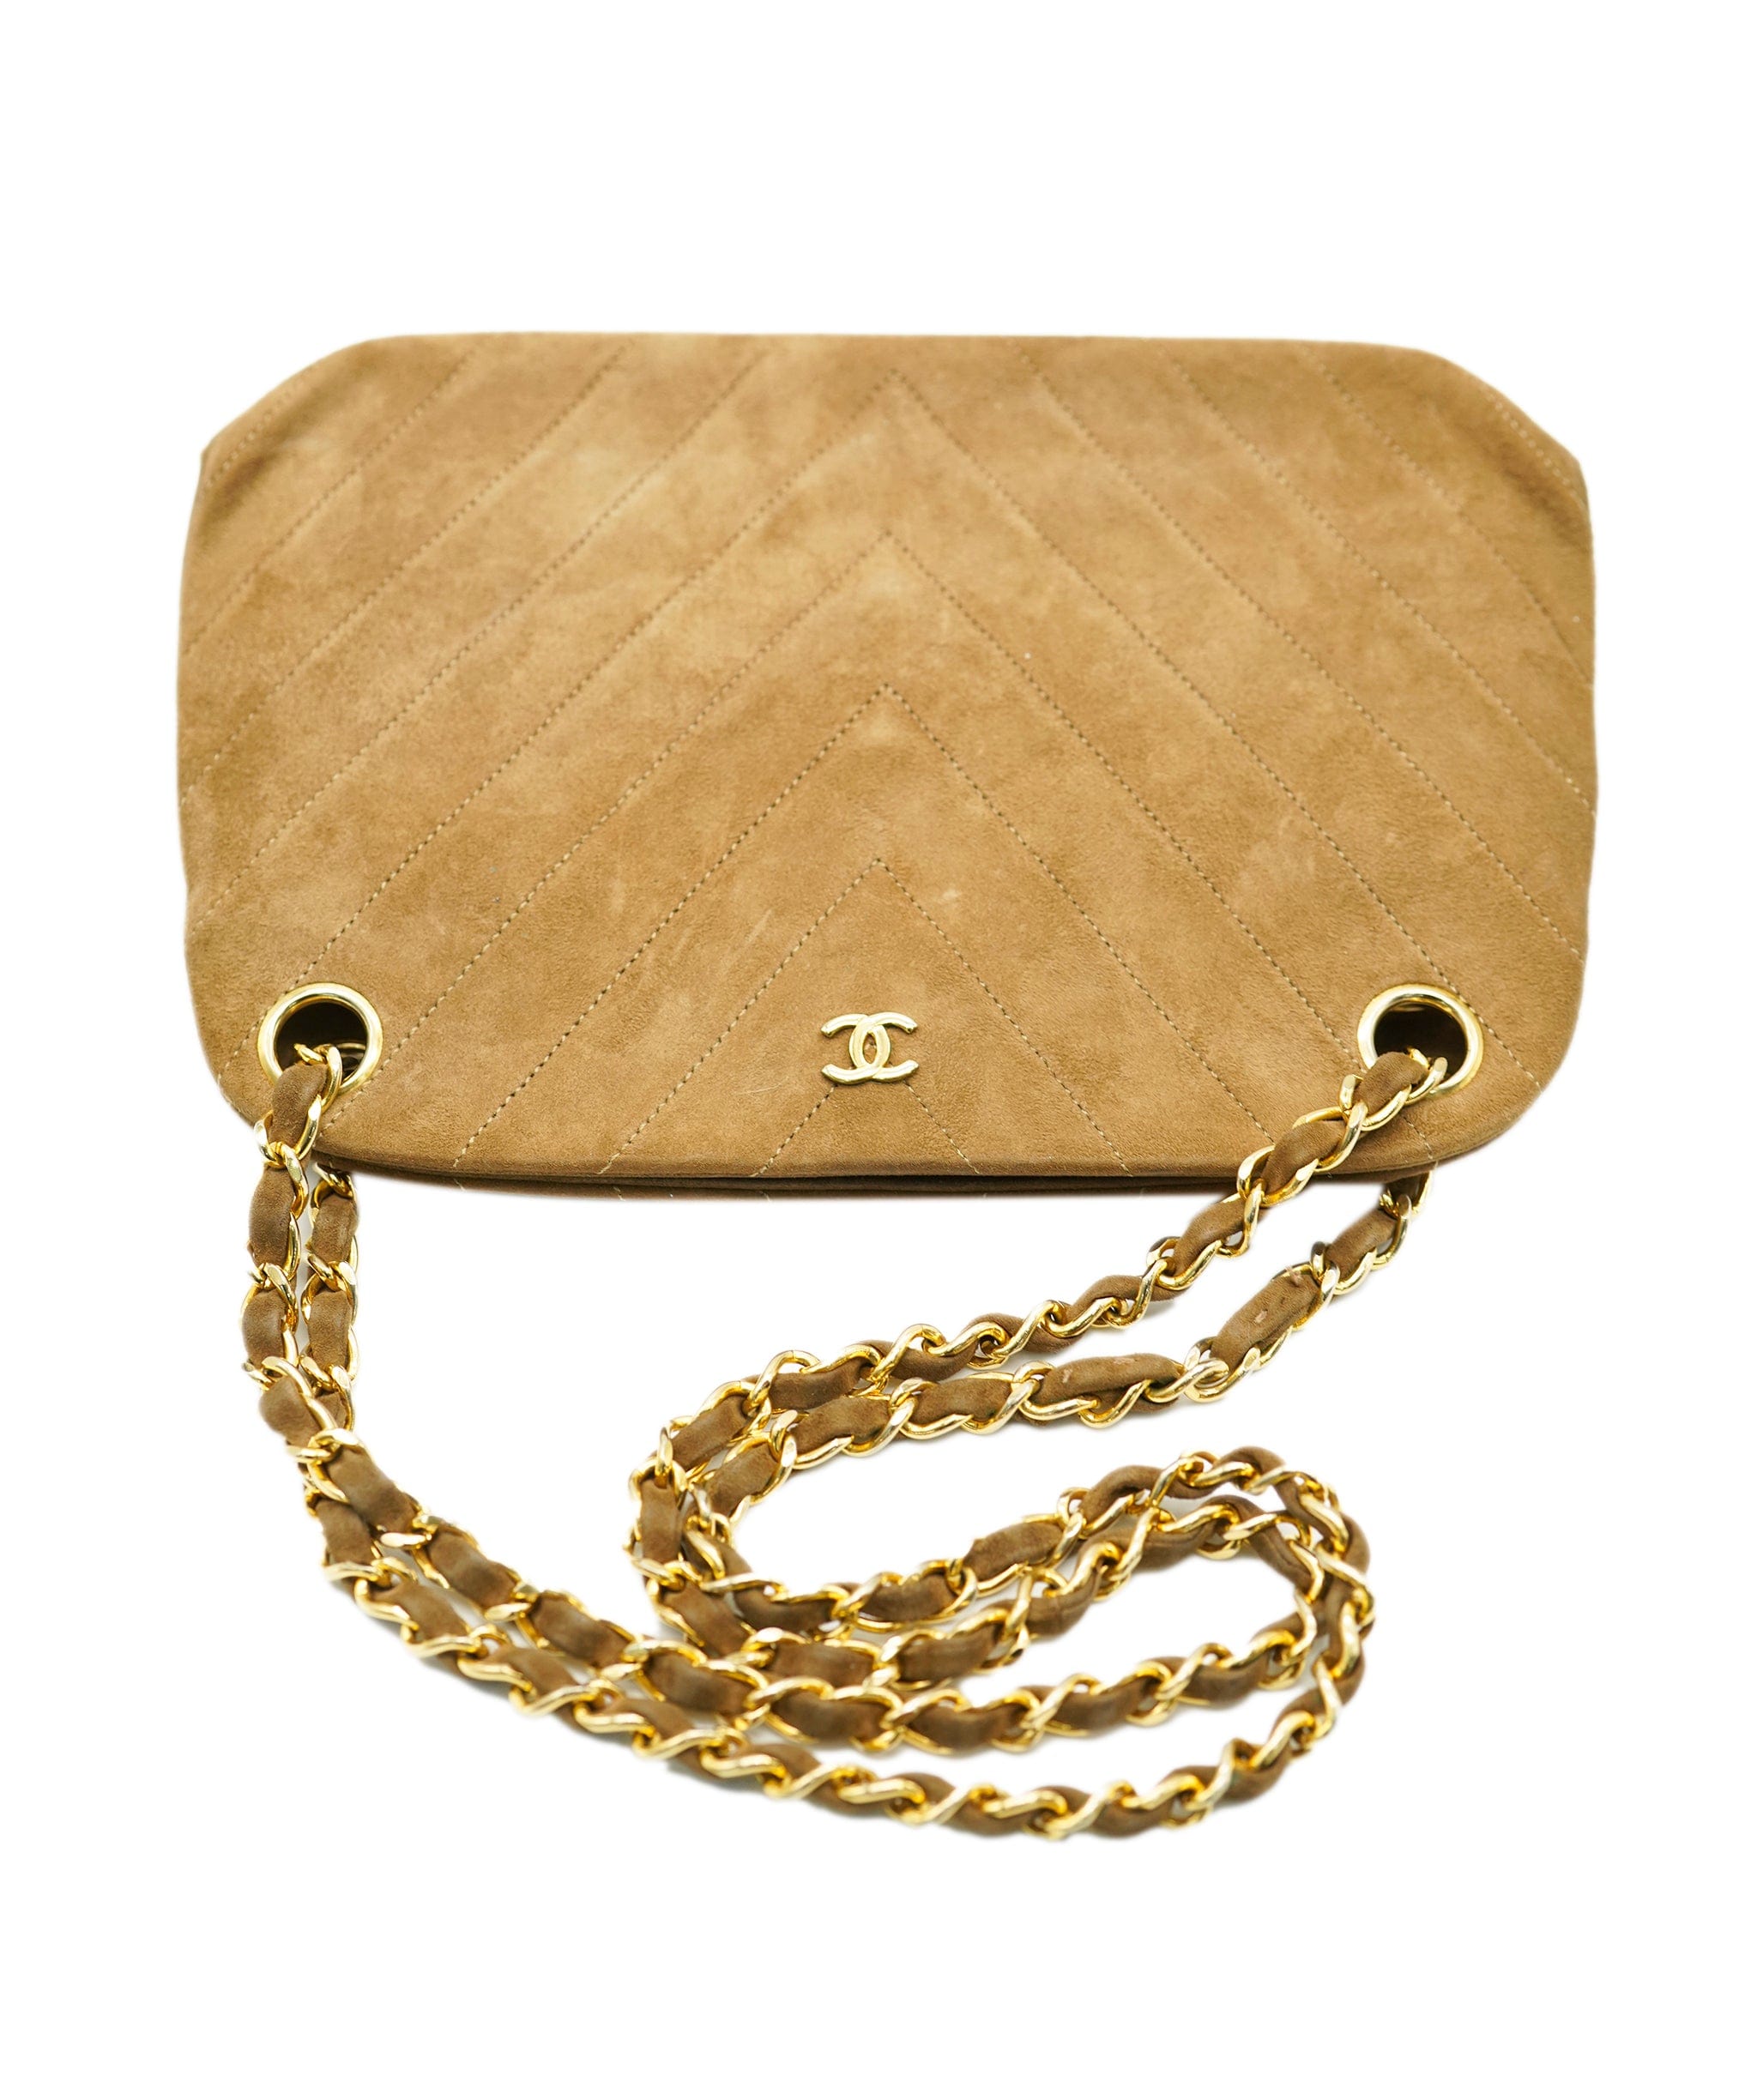 Chanel Chanel camel chevron suede shoulder bag with GHW AJL0176